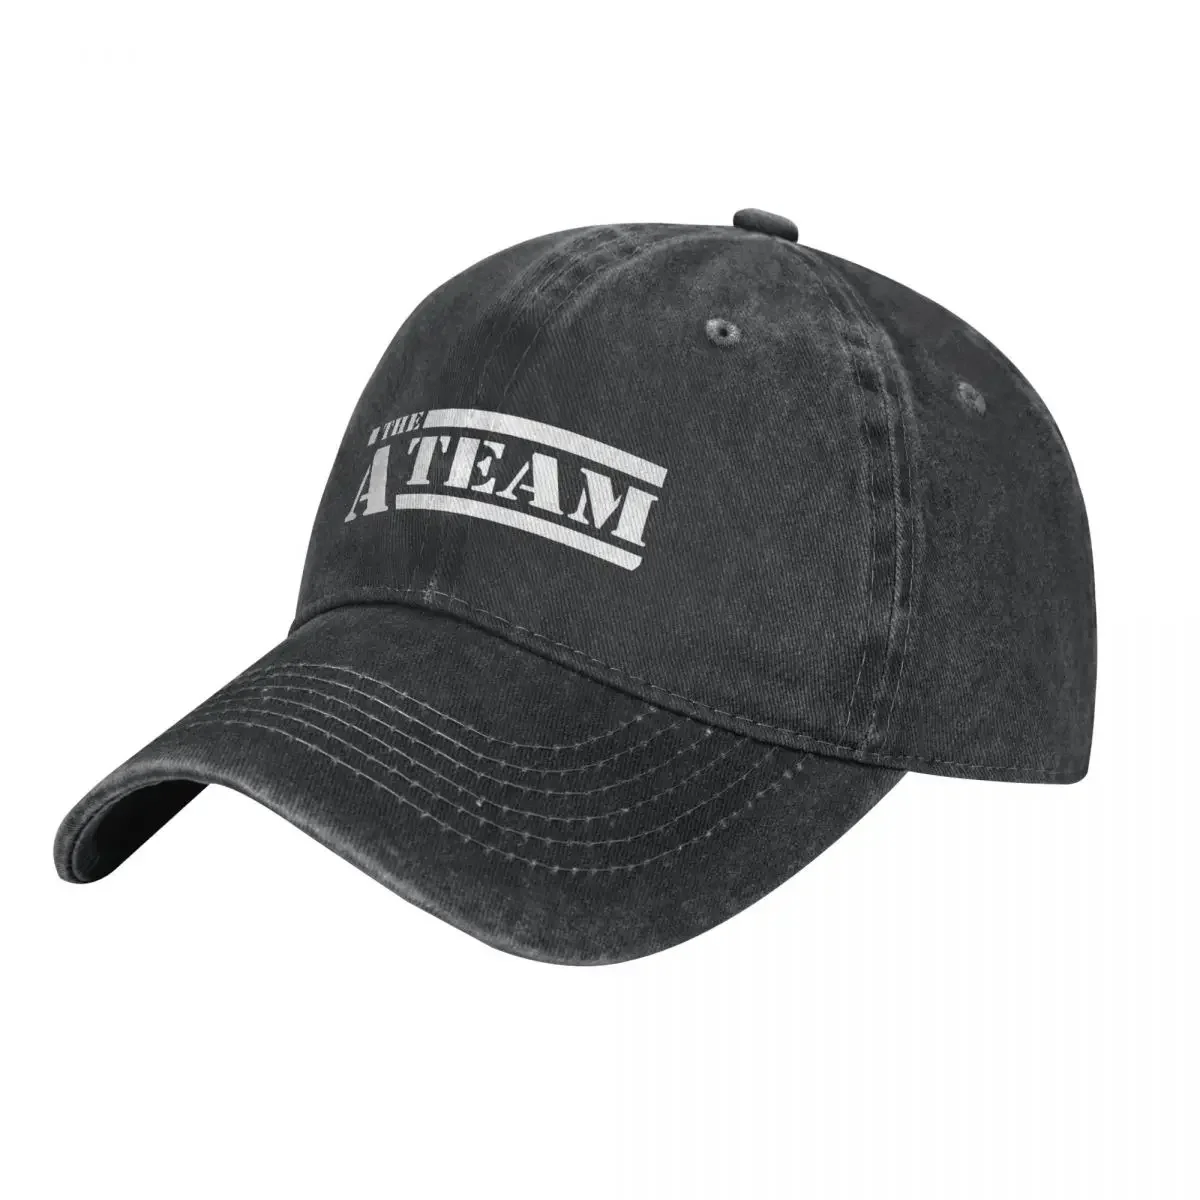 THE A-TEAM Cowboy Hat Hat Baseball Cap Big Size Hat Wild Ball hiking Sun Hats For Women Men's цена и фото